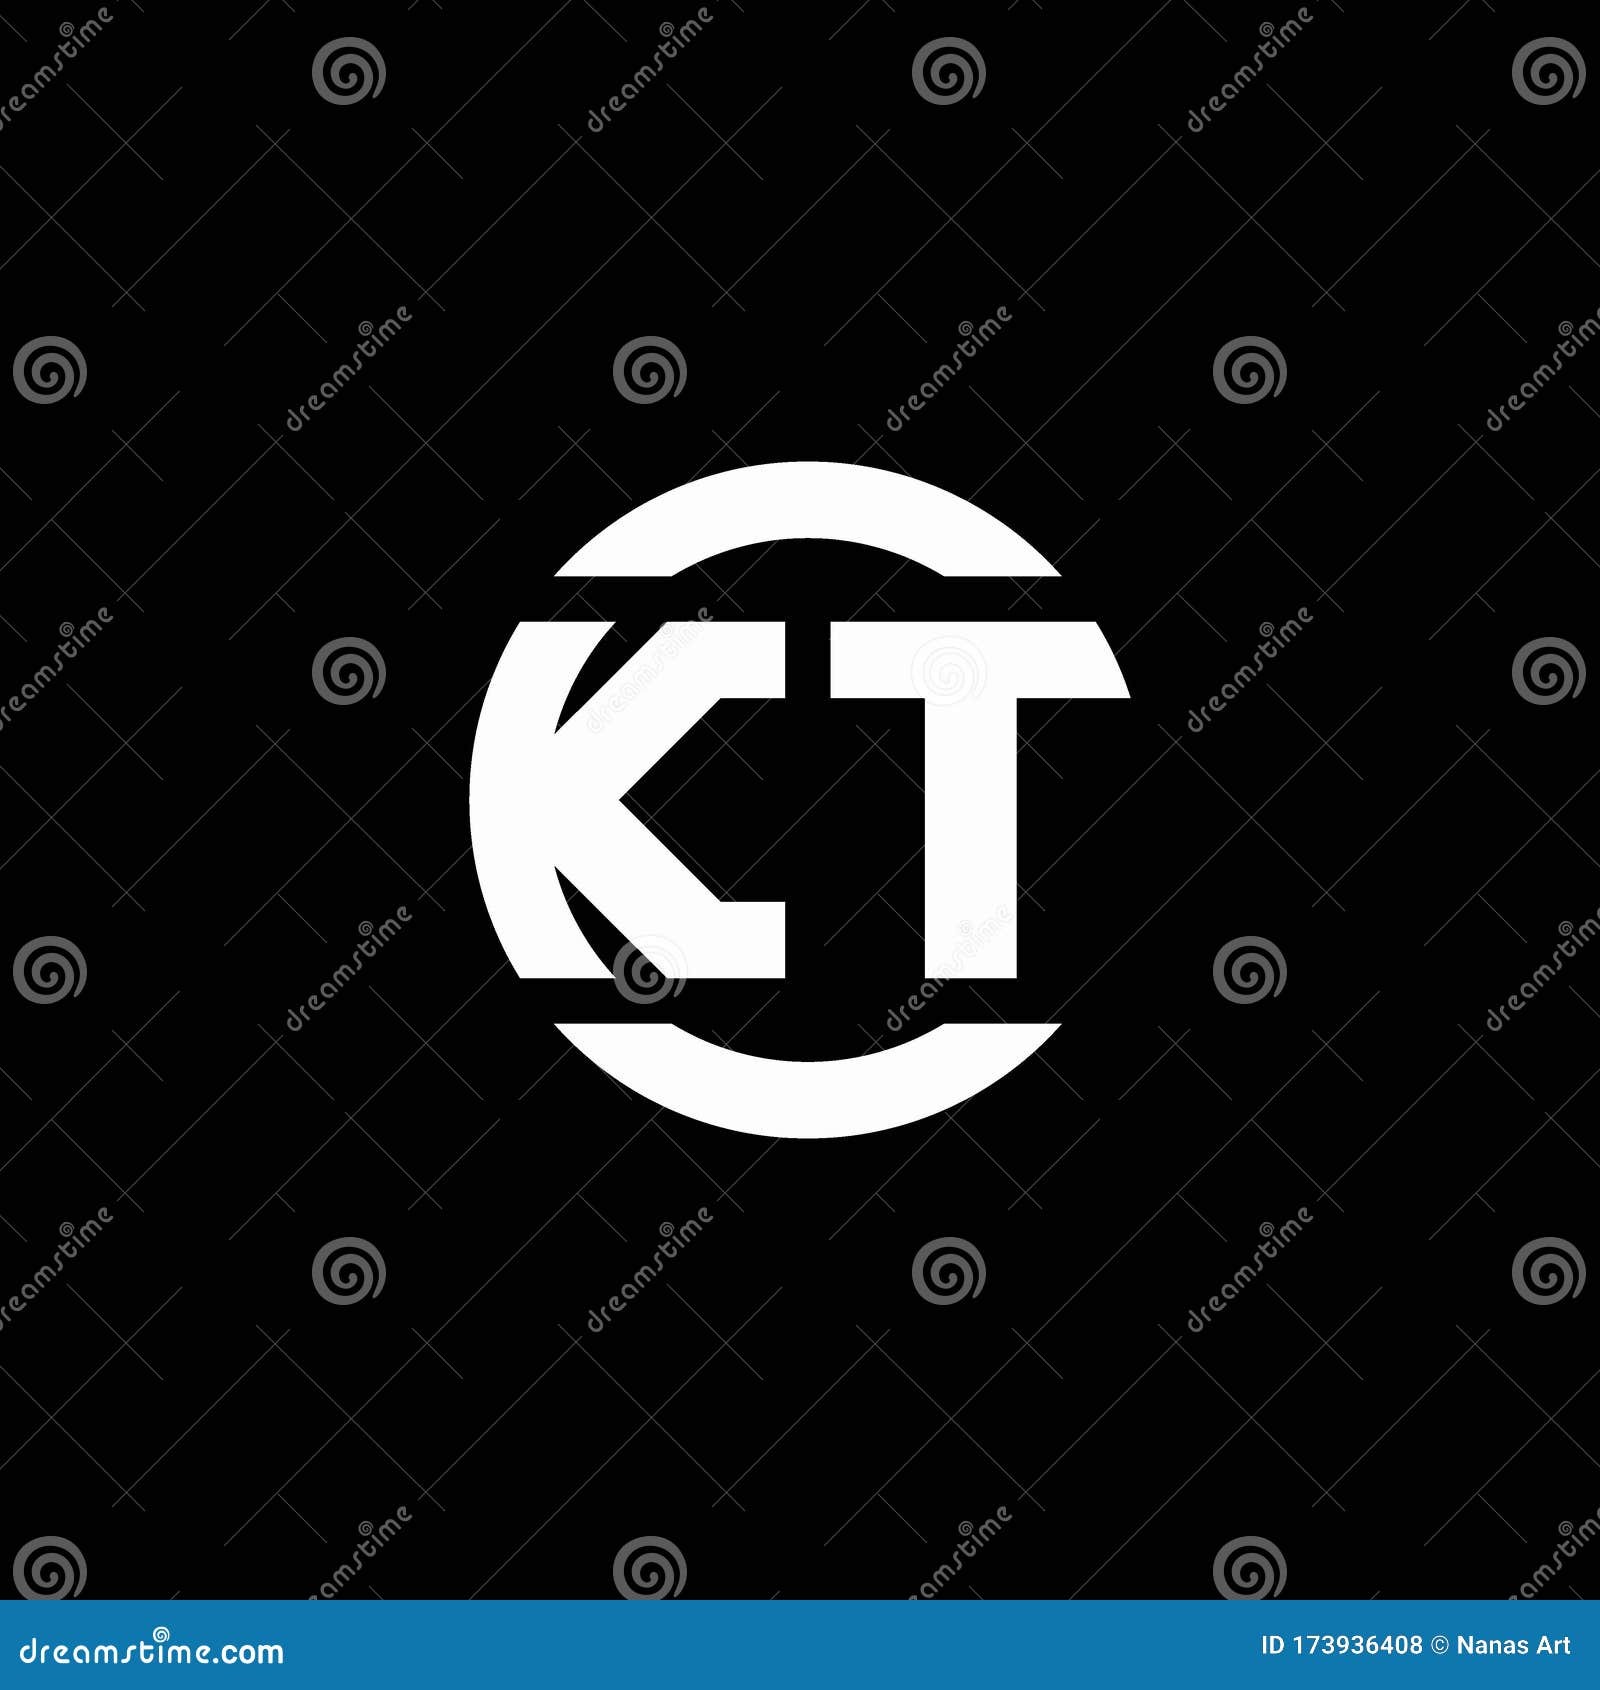 KT Logo Monogram Isolated on Circle Element Design Template Stock ...